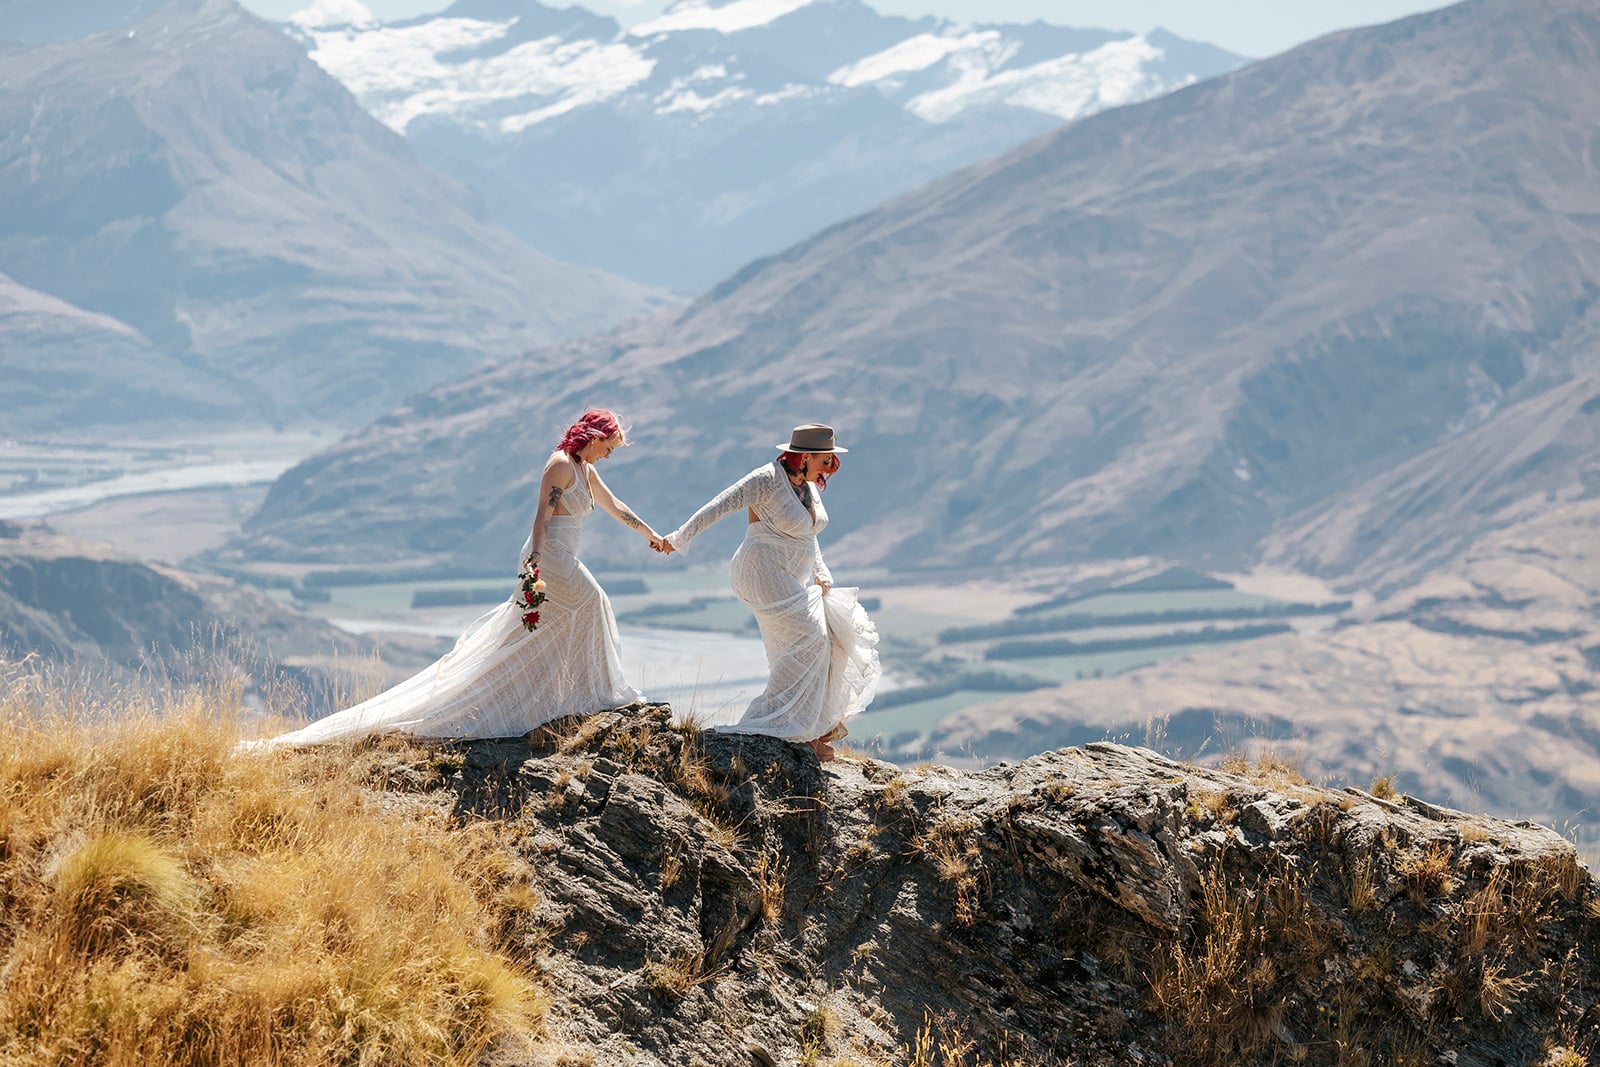 LBGTQ Heli Wedding with two brides on Coromandel Peak